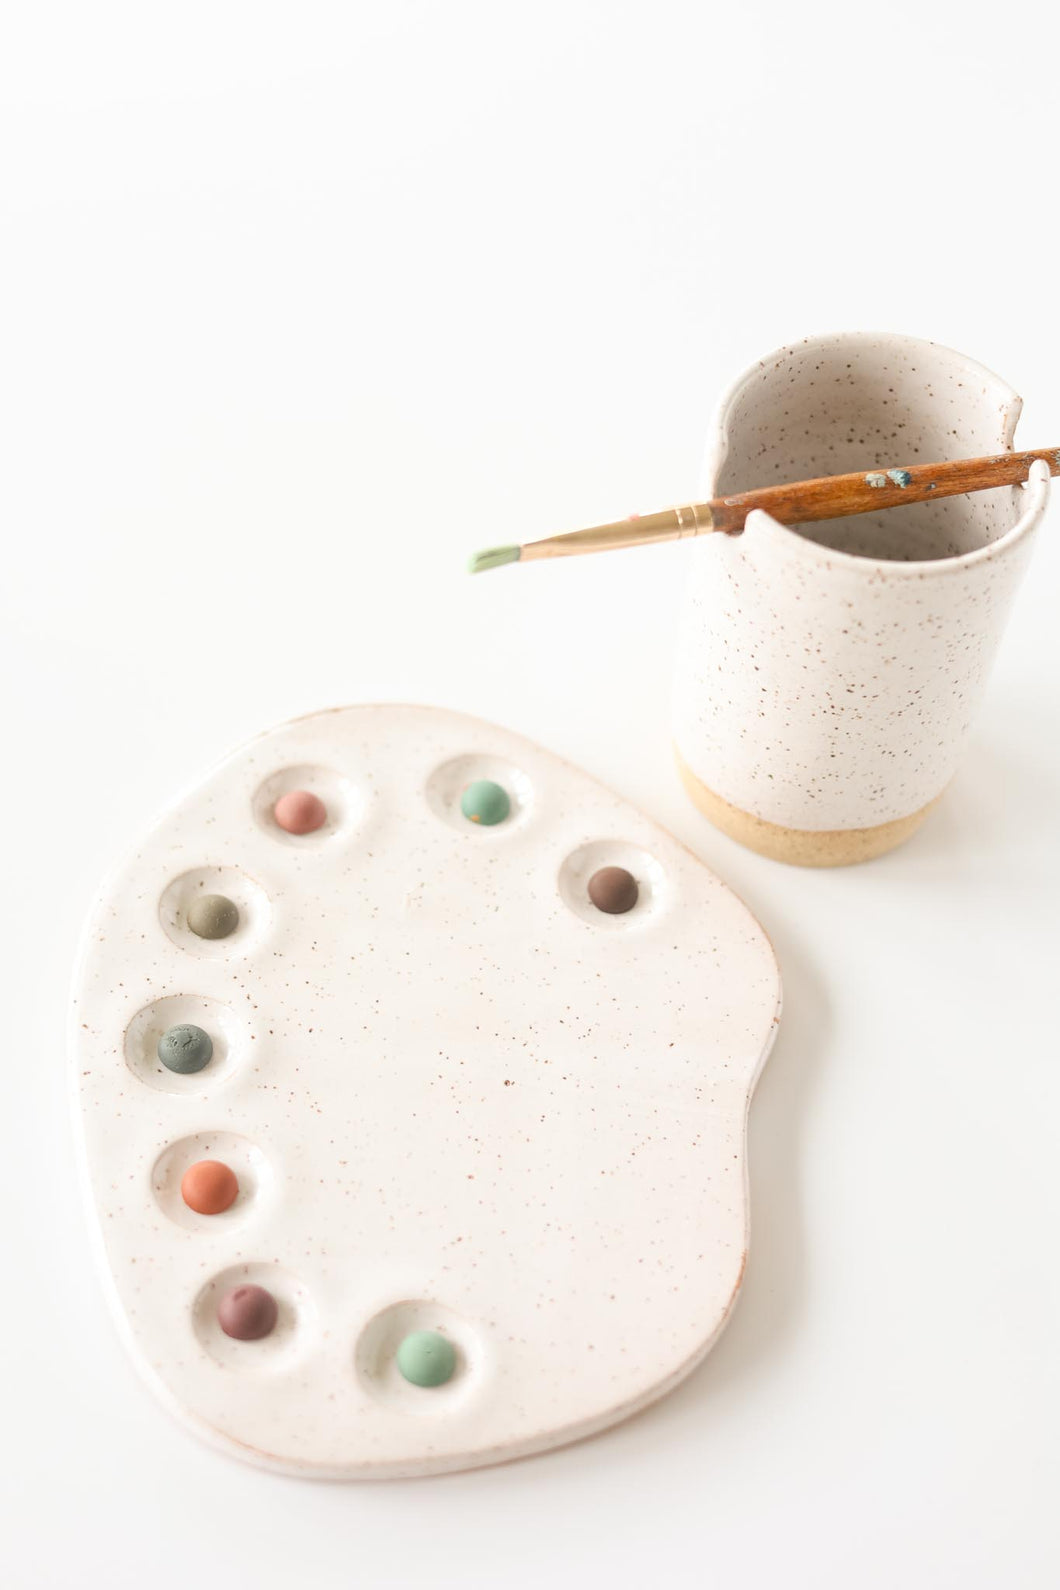 miss painterly modern palette + brush cup set: handmade ceramic painting palette